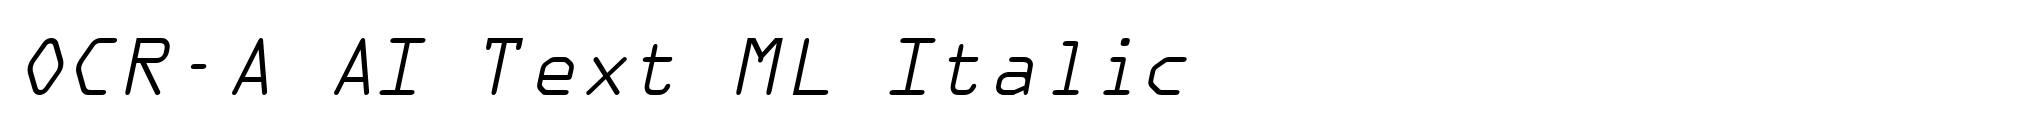 OCR-A AI Text ML Italic image